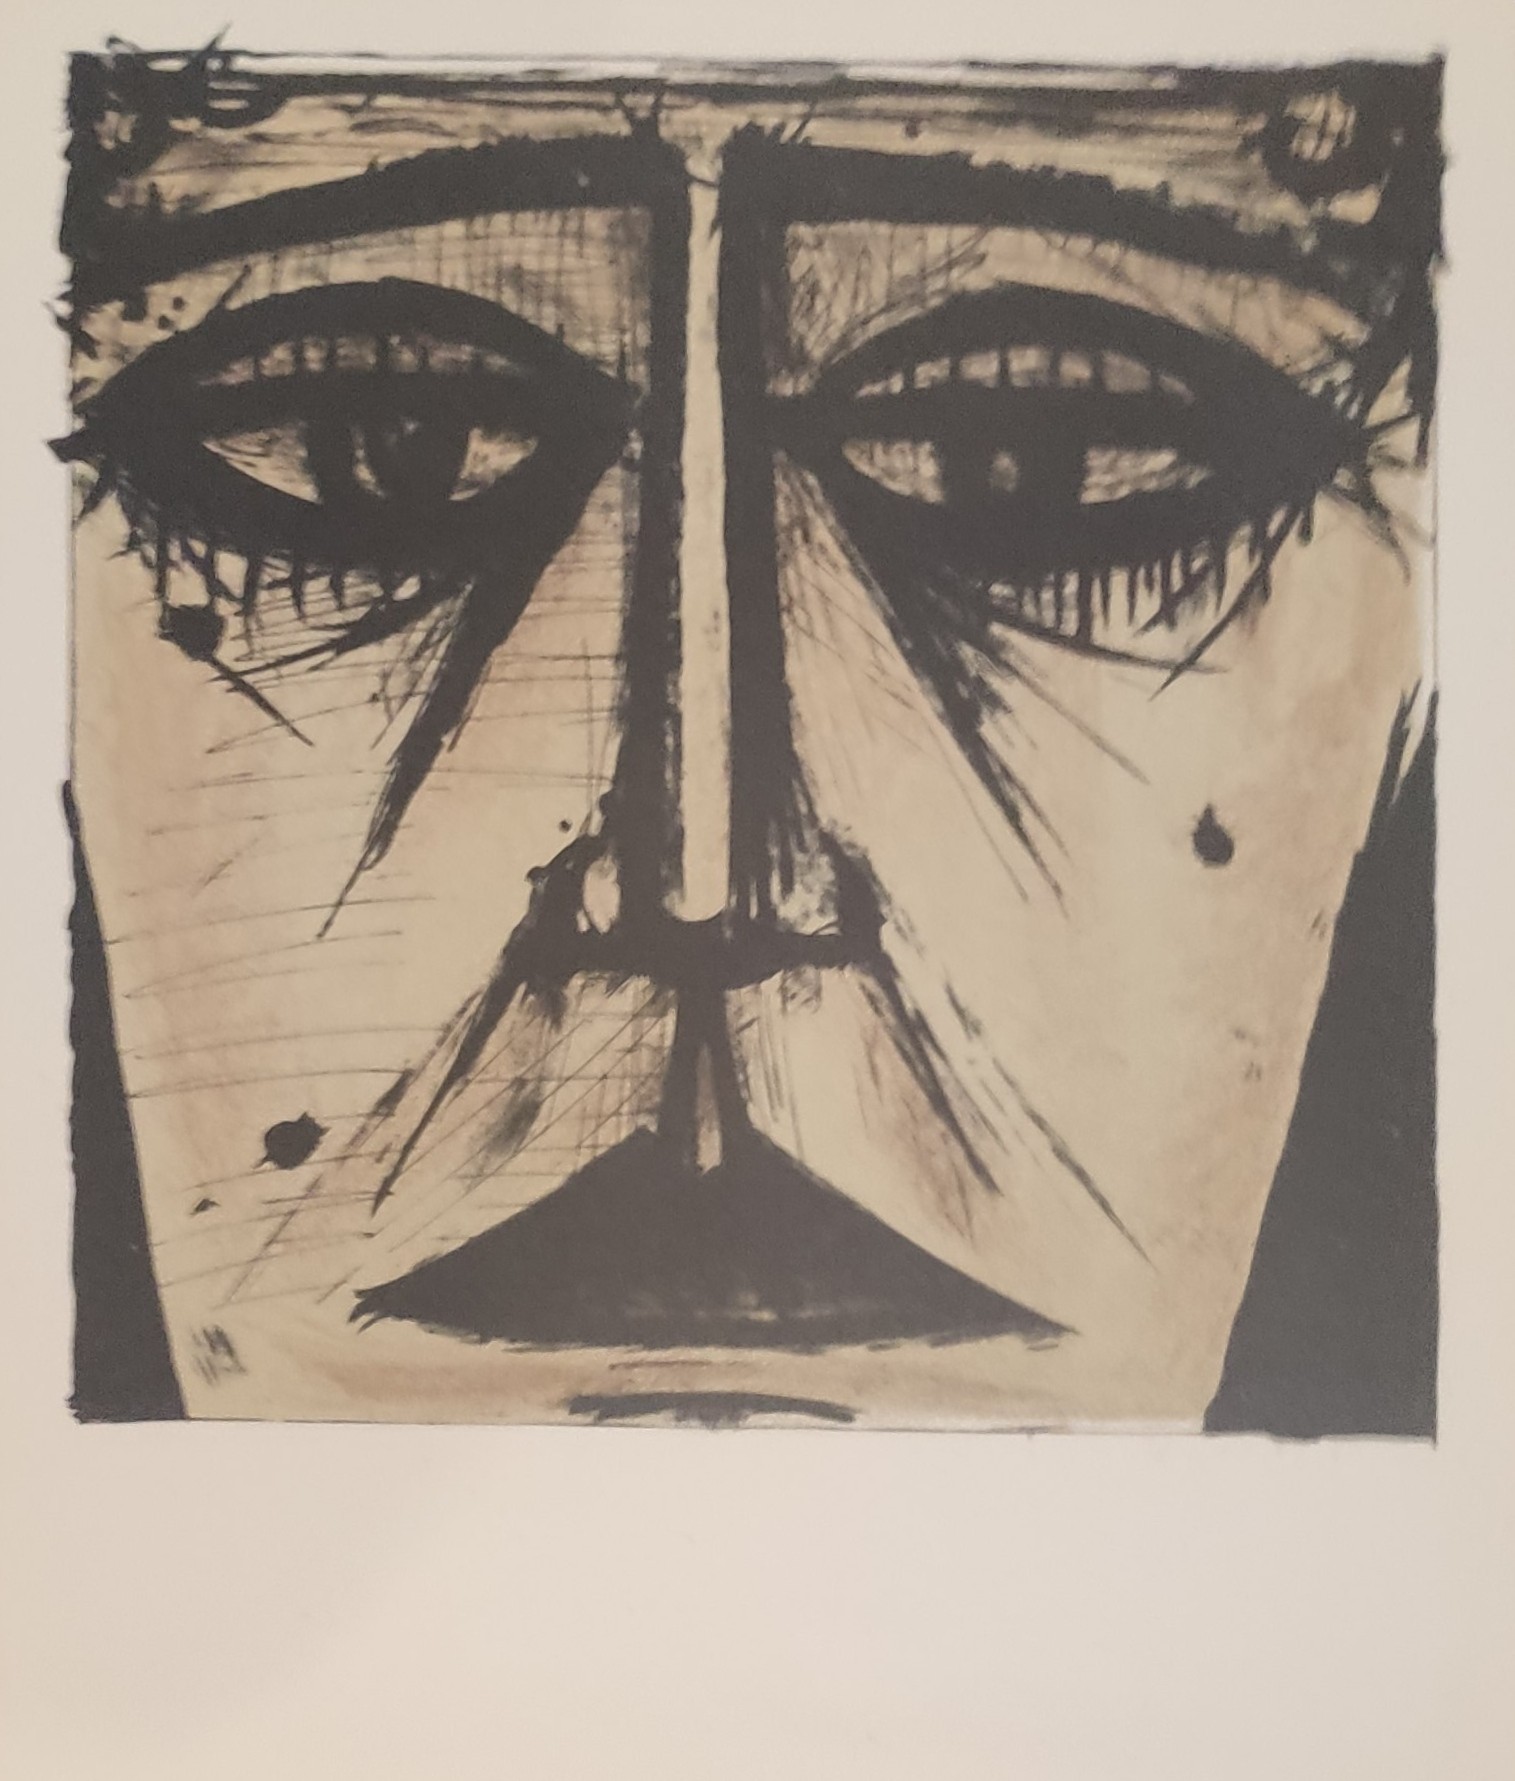 VISAGE - BUFFET Bernard (d’après ) (1928 - 1999) - Lithographie